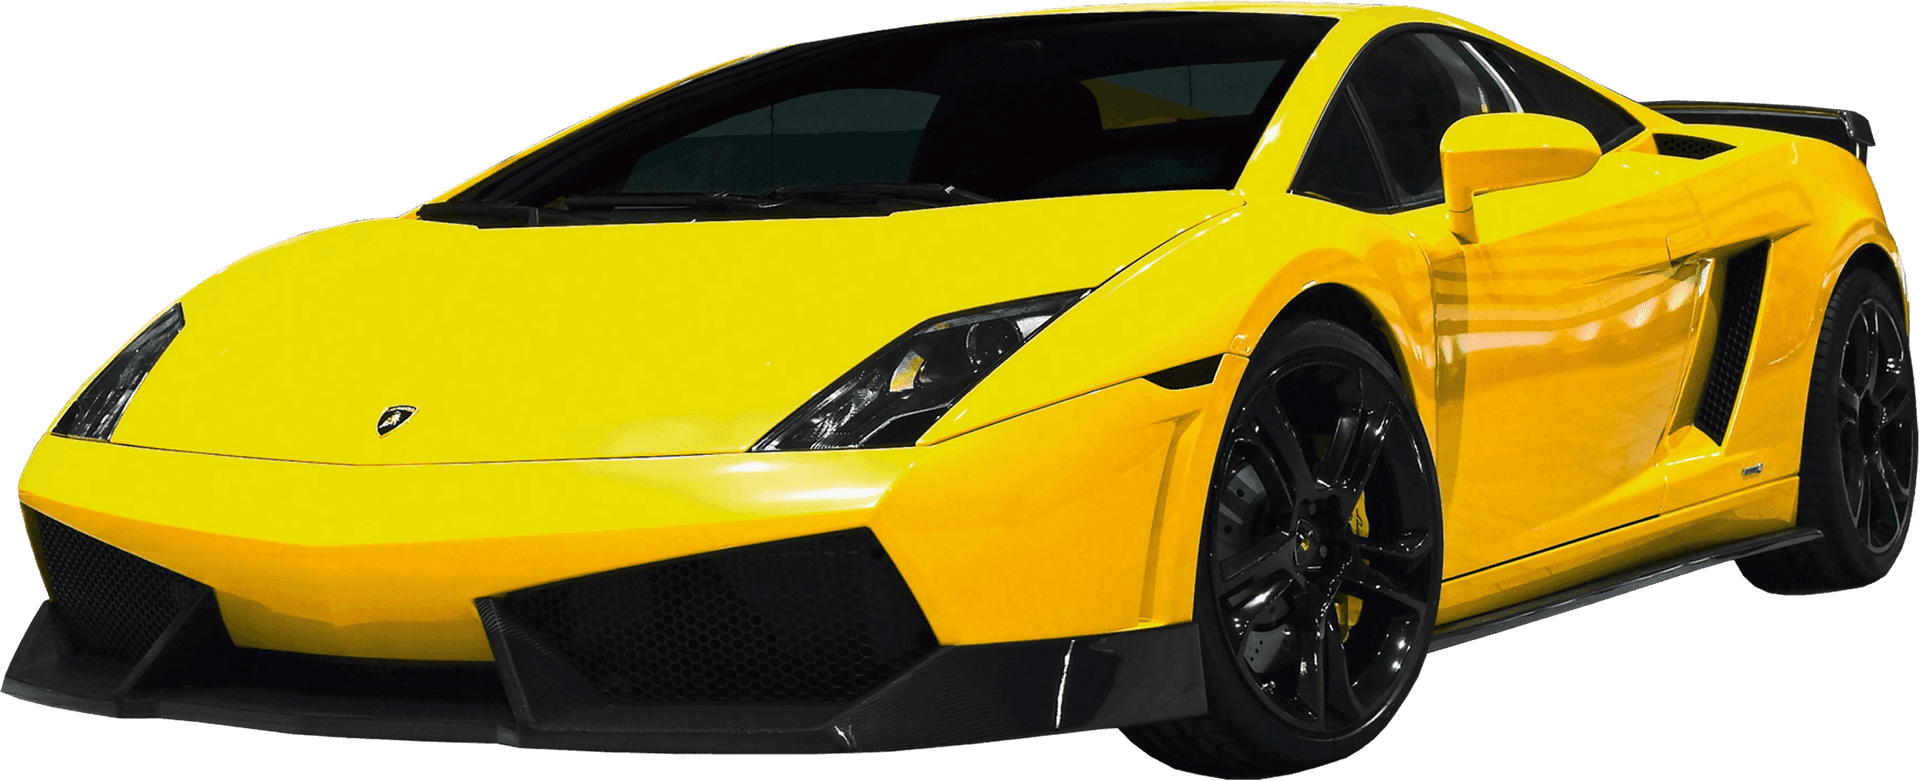 Yellow Lamborghini Gallardo Side View PNG